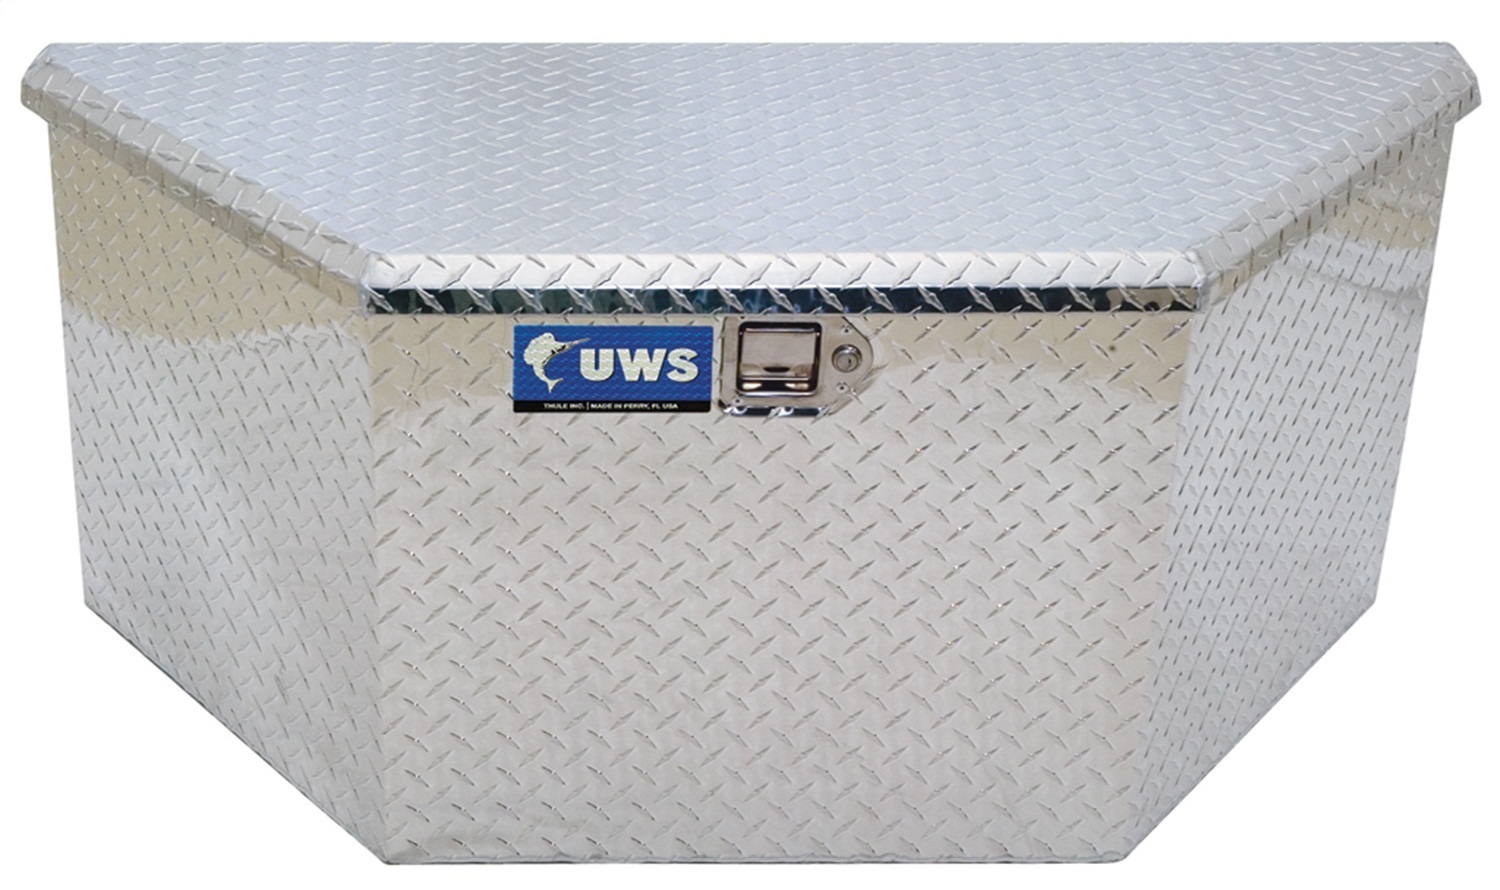 UWS UWS TBV-49 Trailer Box